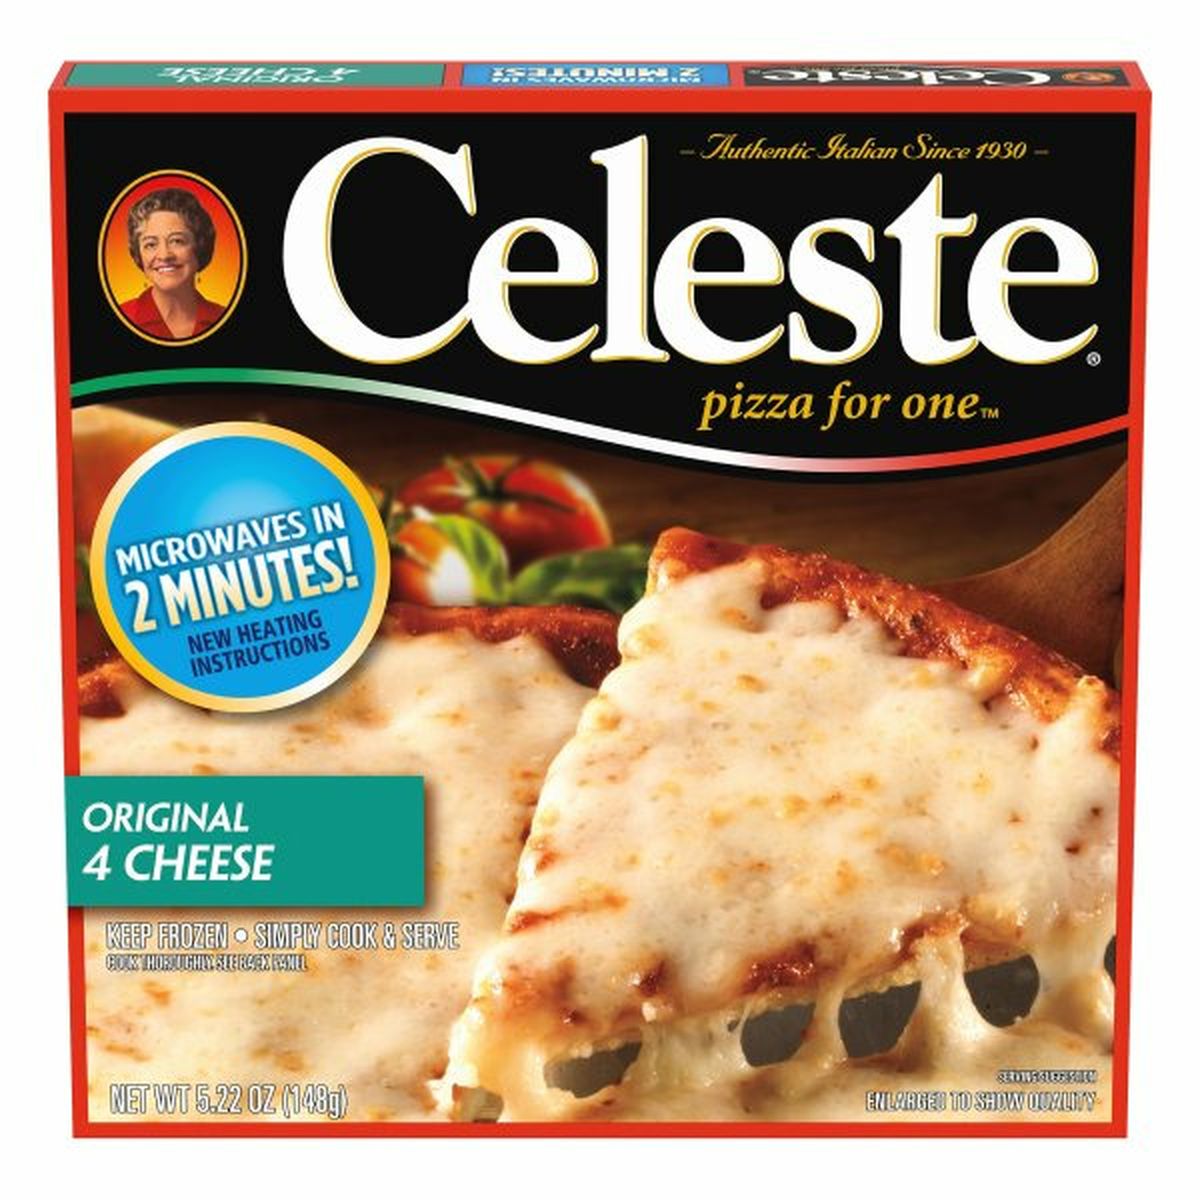 Calories in Celeste Pizza, Original 4 Cheese